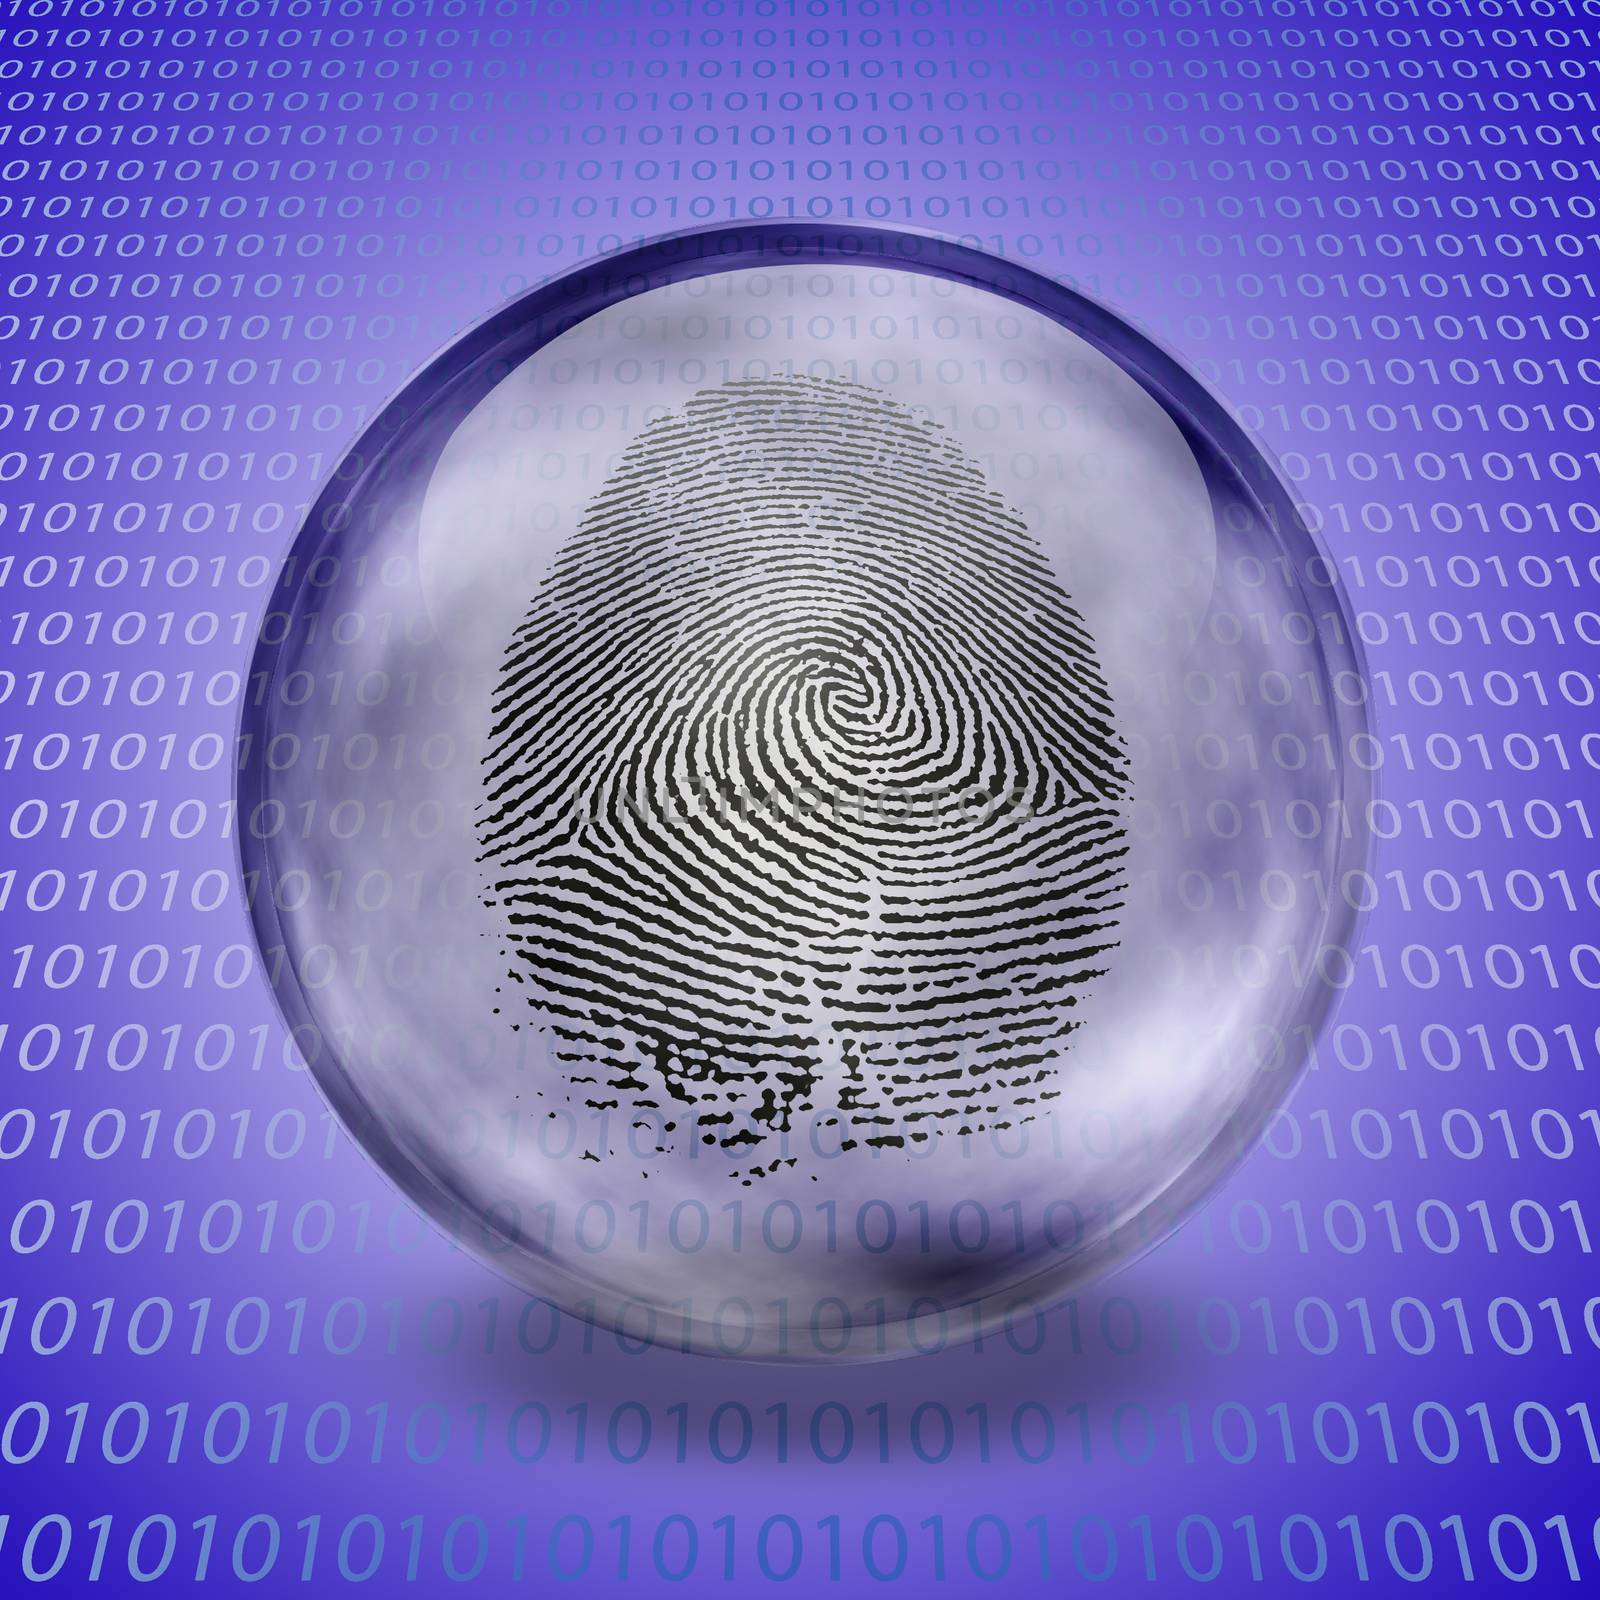 Fingerprint in glass sphere and binary code